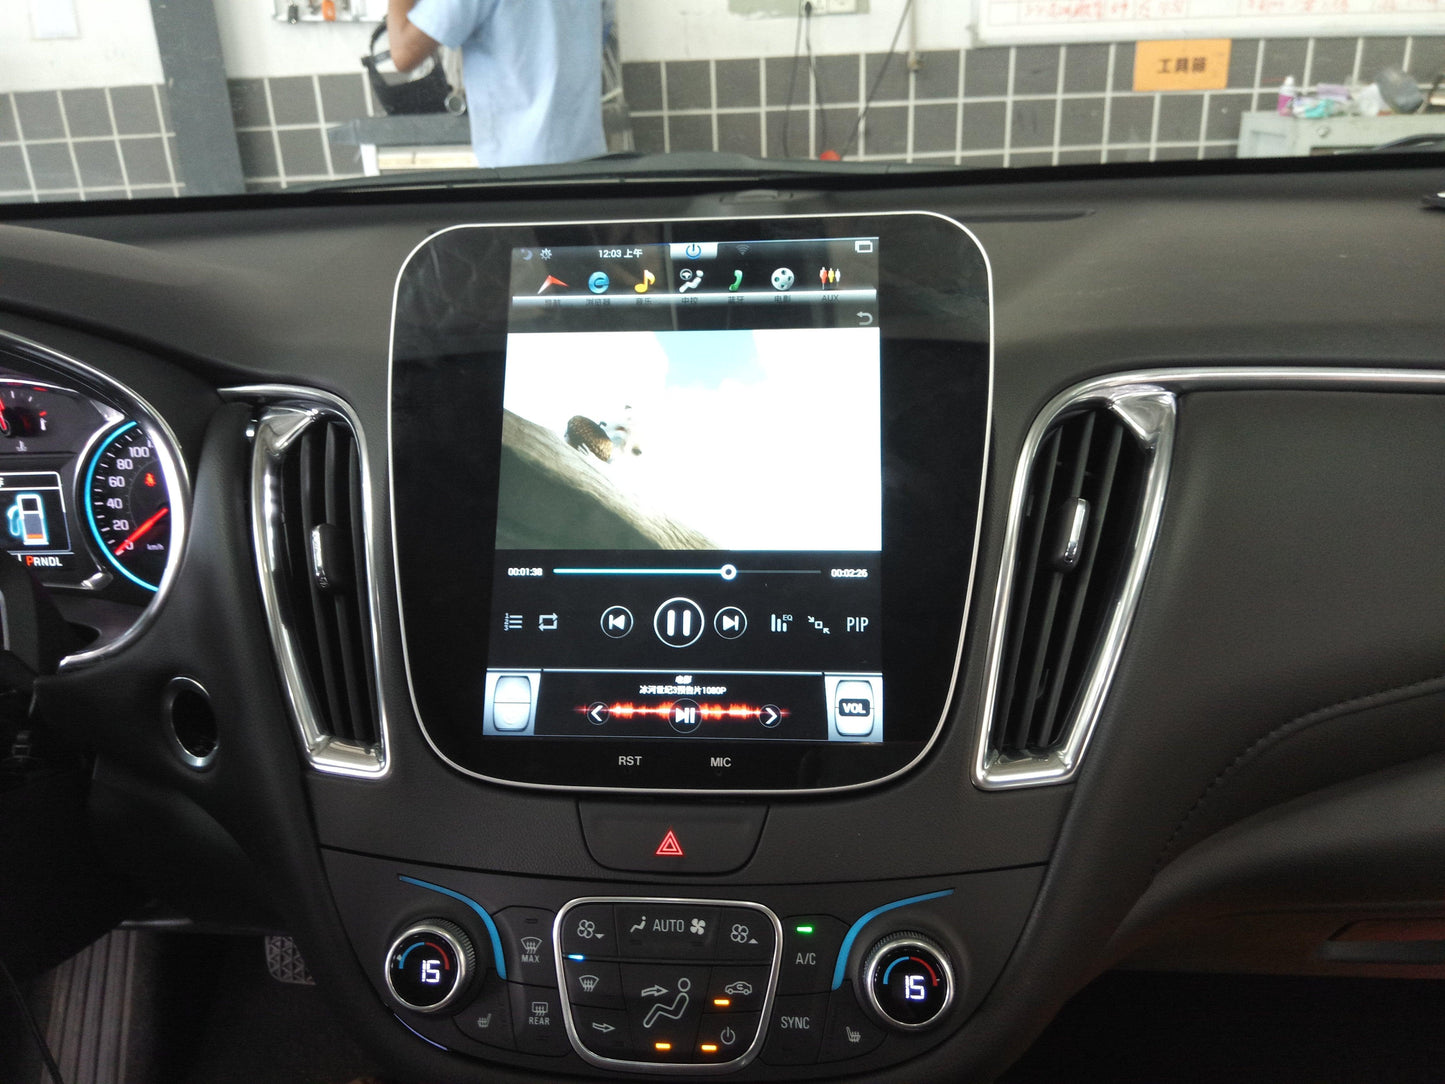 Open Box [ PX6 six-core ]  9.7" Android Vertical Screen Navi Radio for Chevrolet Malibu 2016 - 2019 - Smart Car Stereo Radio Navigation | In-Dash audio/video players online - Phoenix Automoti